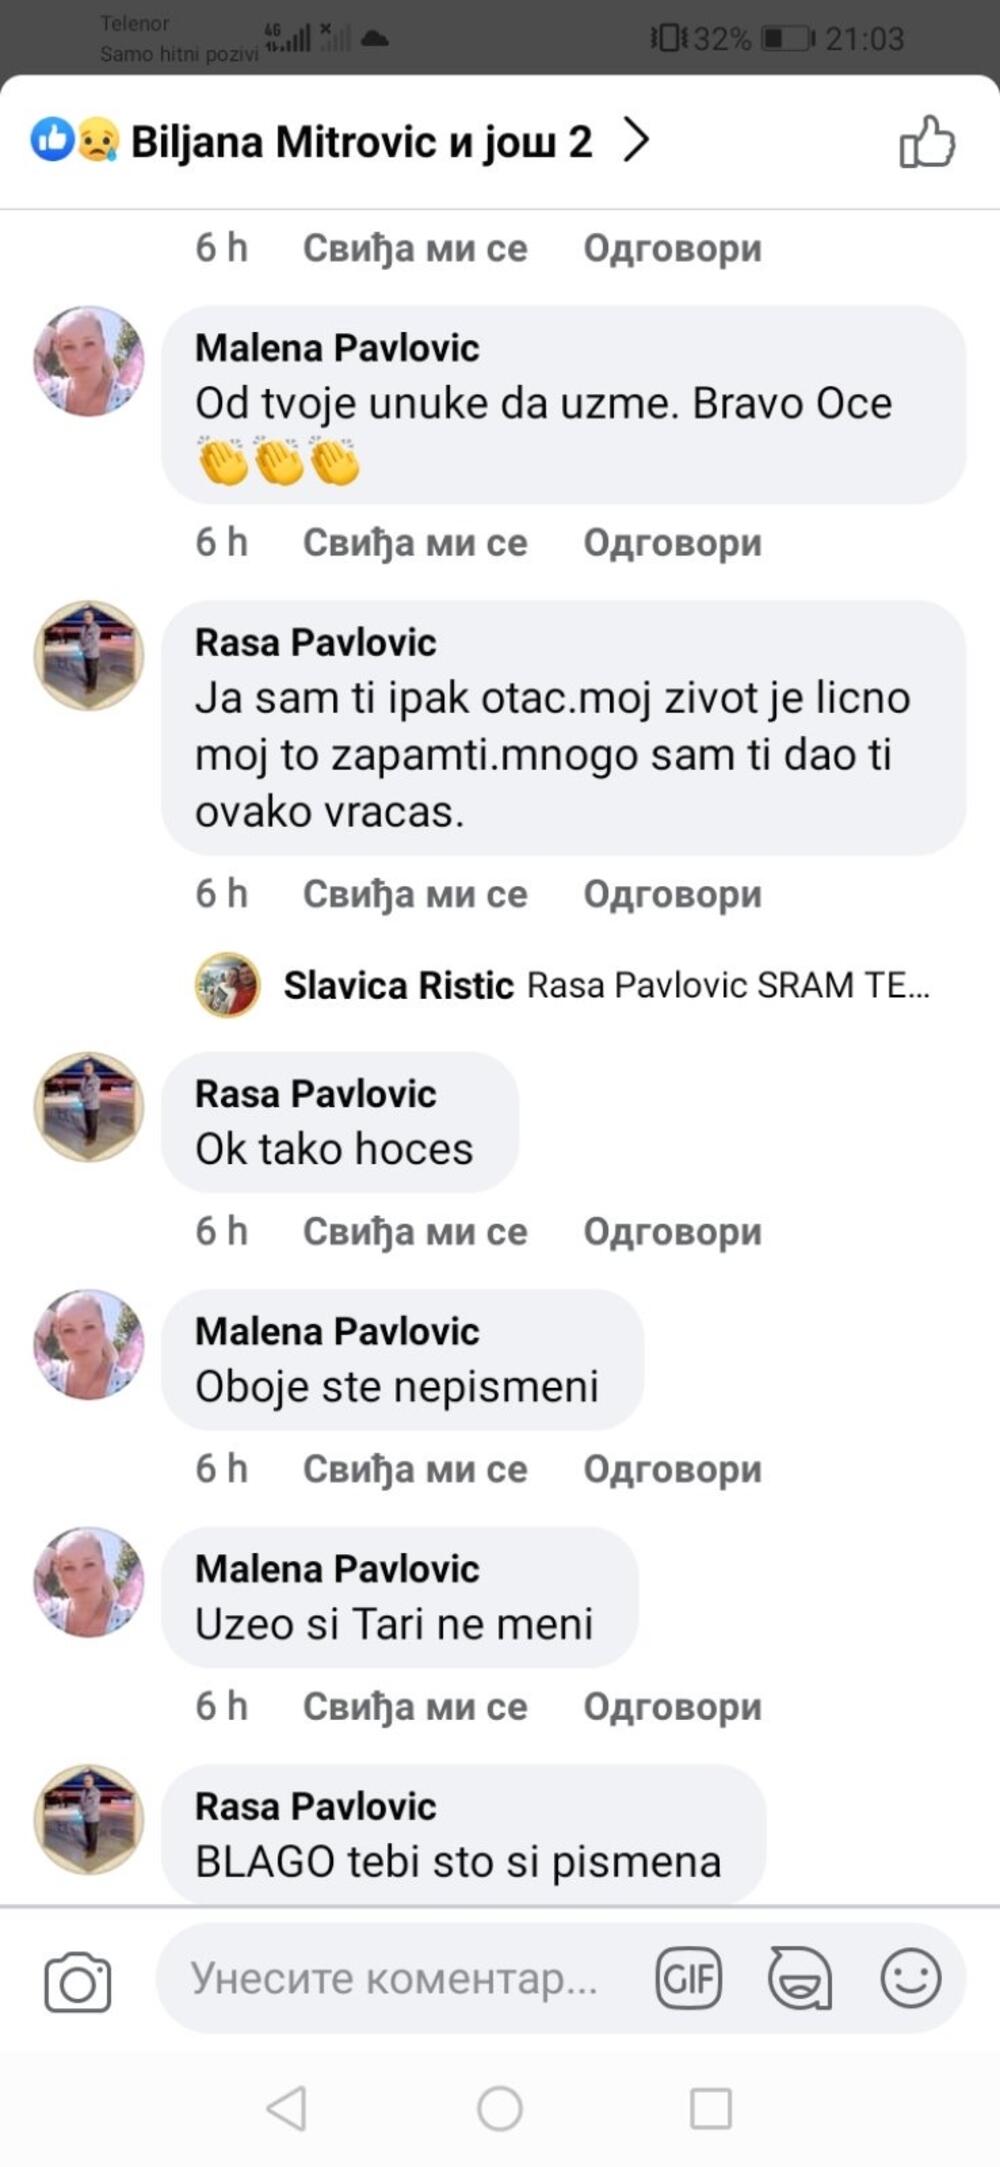 Raša Pavlović, Malena Pavlović